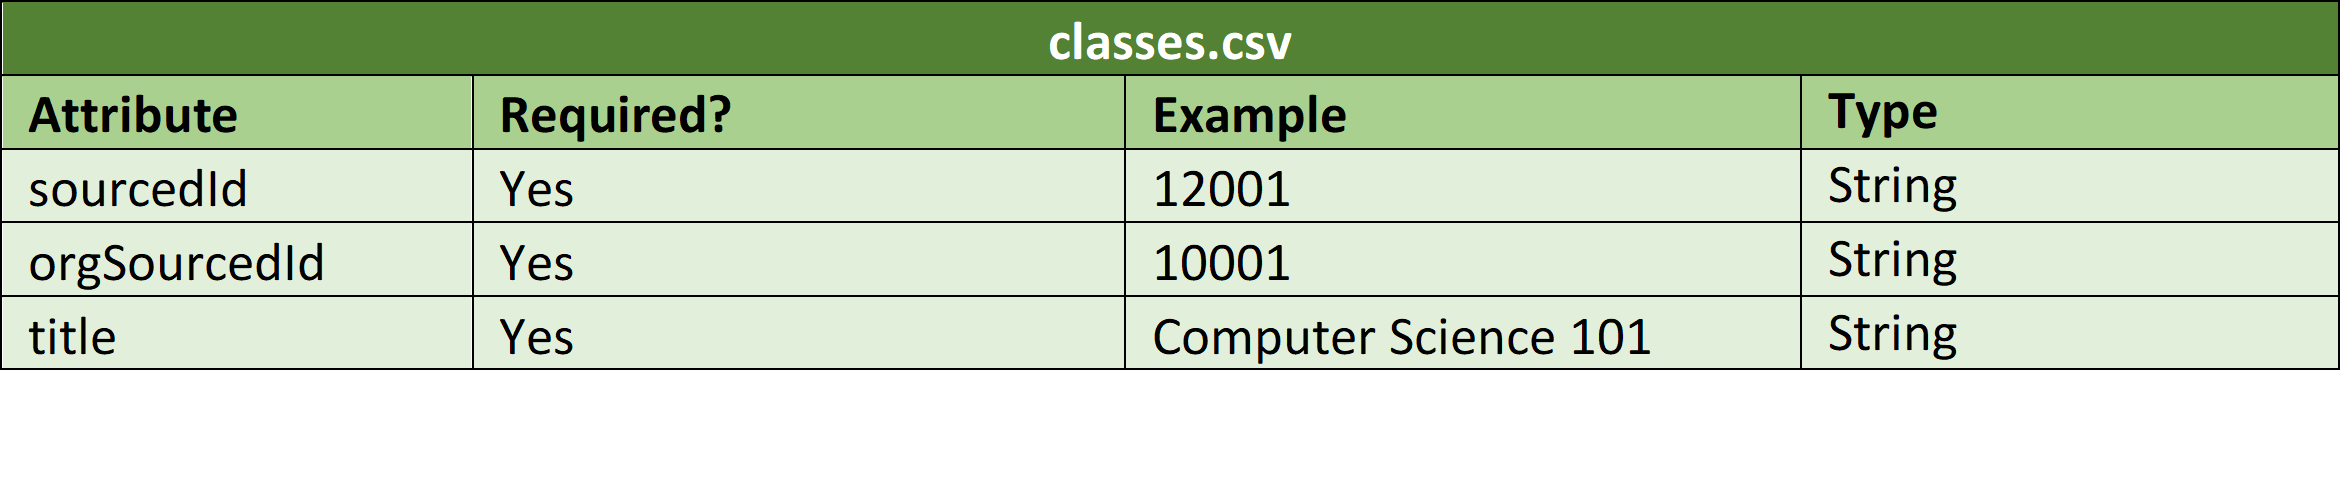 csv-file-v2-4.png。